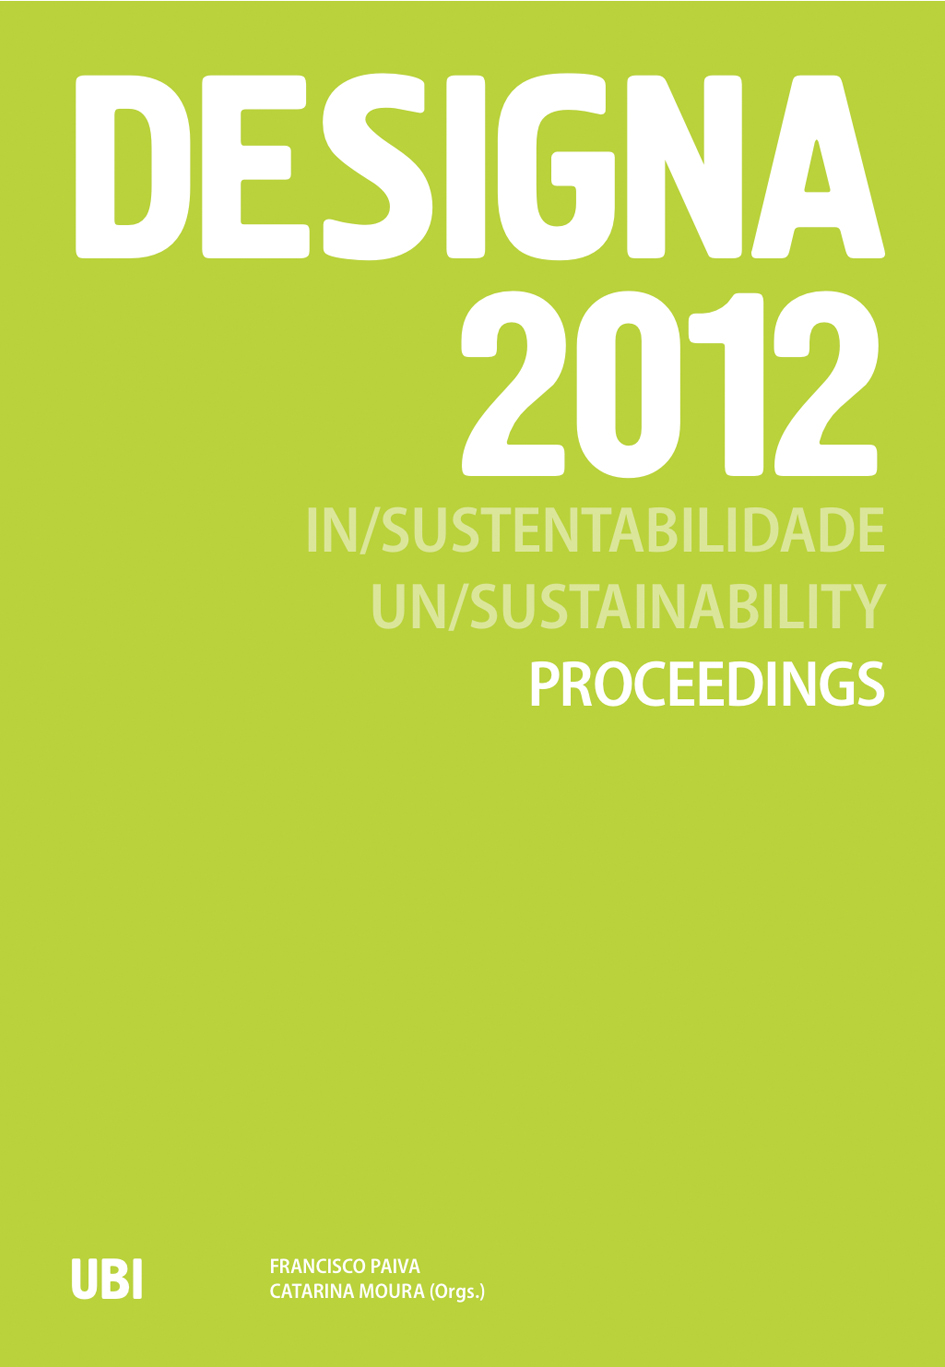 Capa: Francisco Paiva, Catarina Moura (Orgs.) (2013) DESIGNA 2012 - In/Sustentabilidade . Communication  +  Philosophy  +  Humanities. .